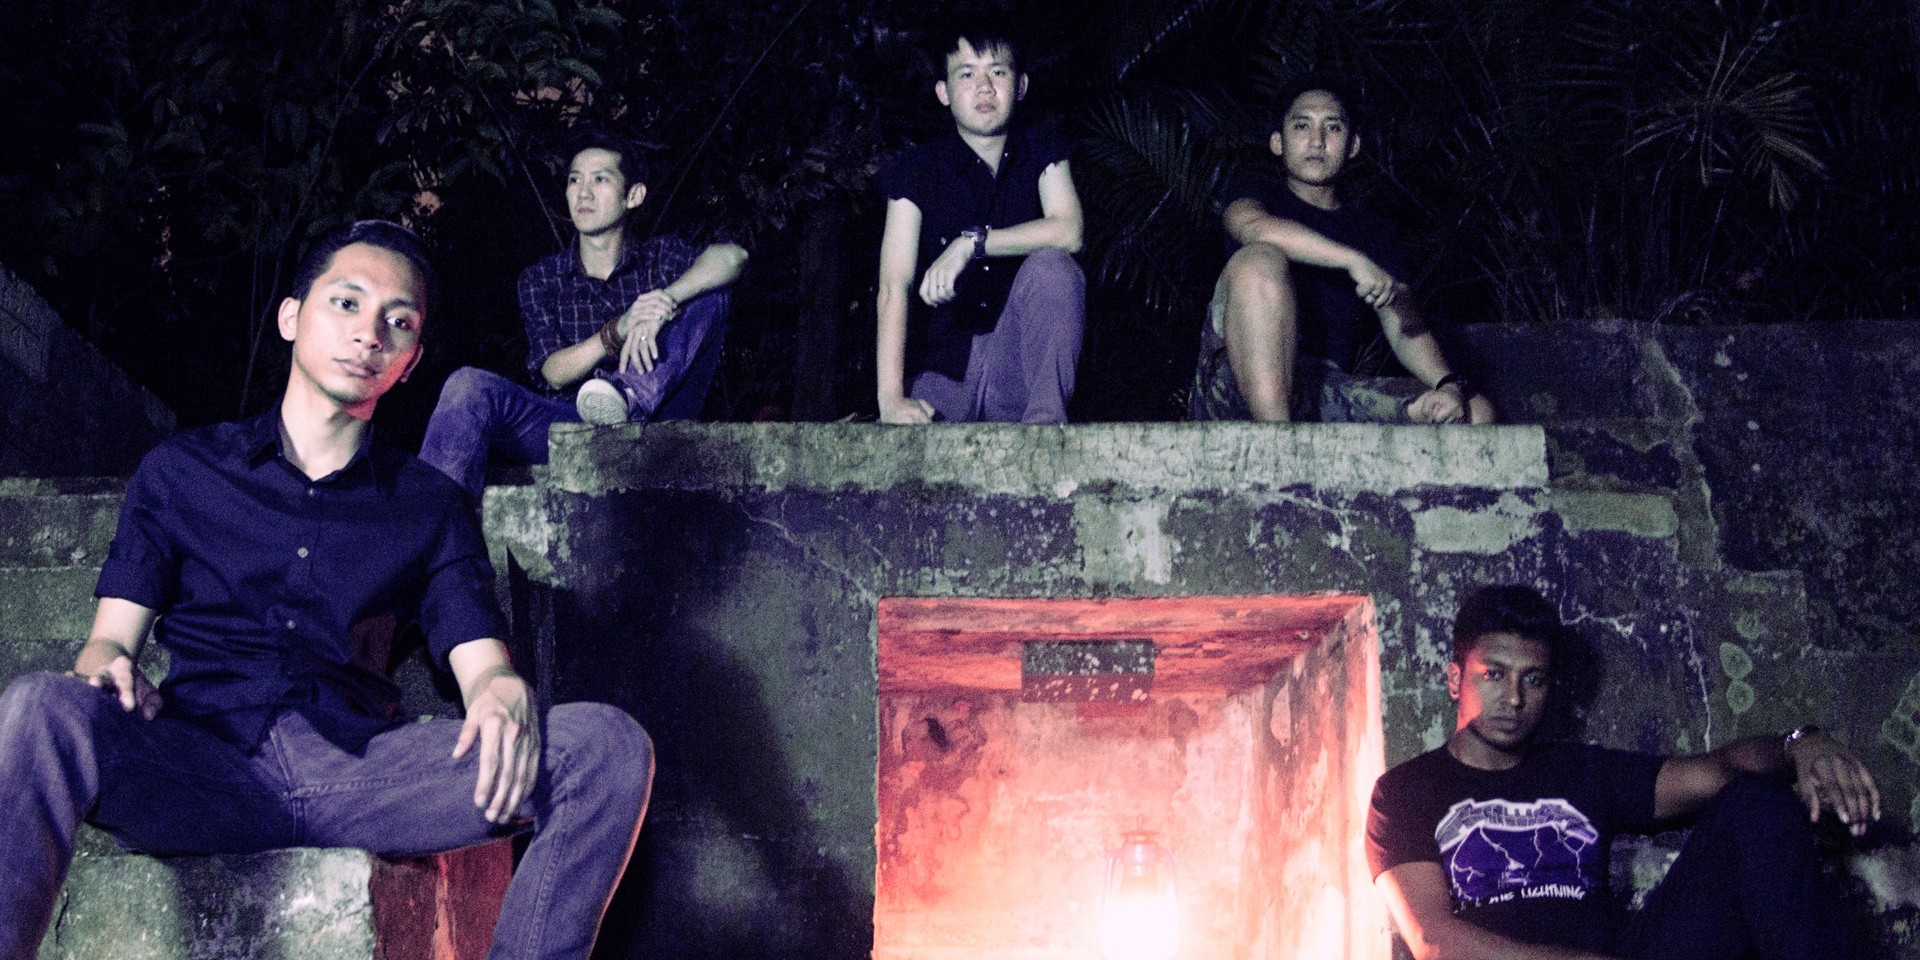 LISTEN: Singaporean death metal band Assault tease their searing, extreme upcoming album